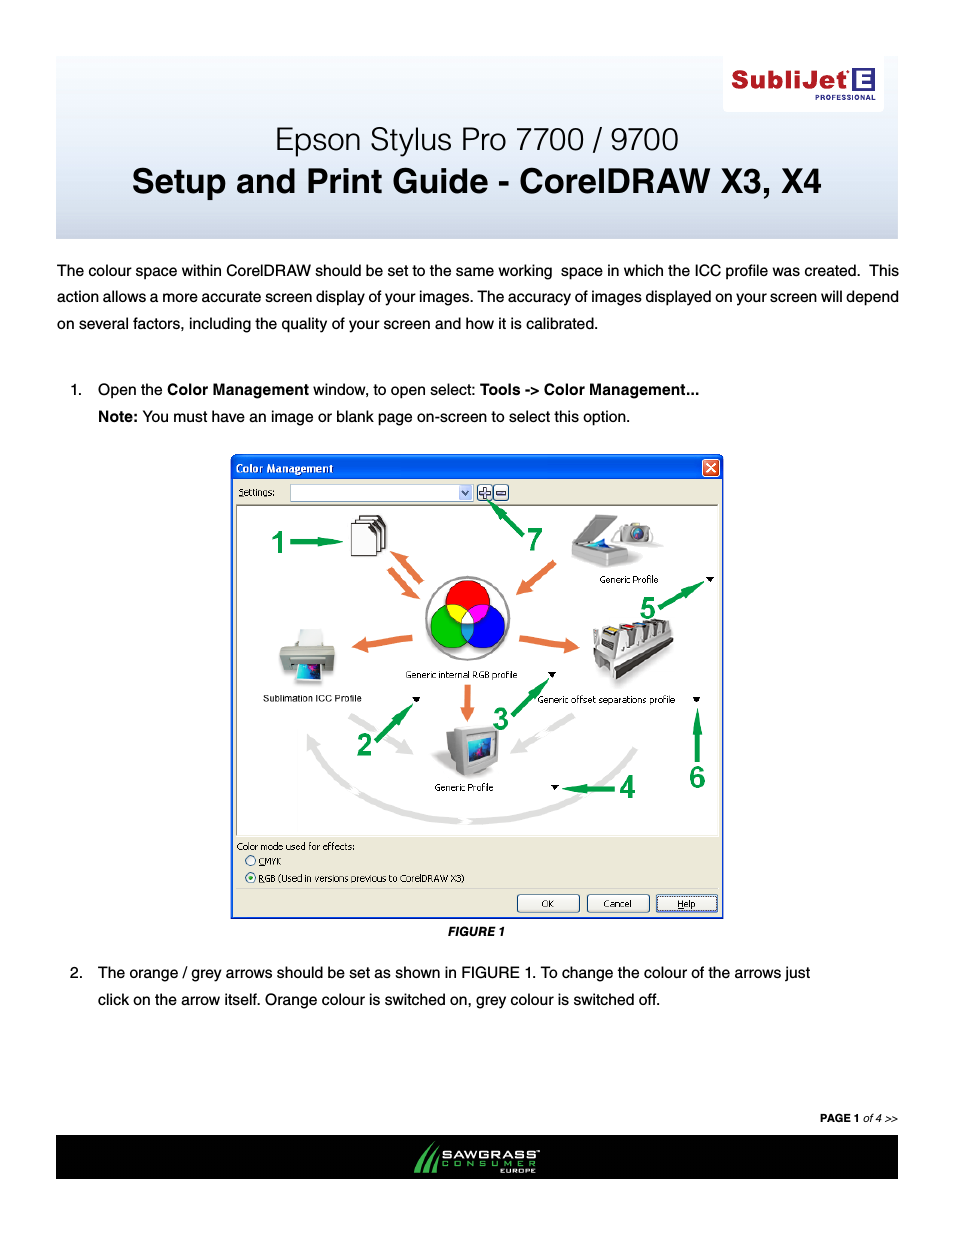 SubliJet E Epson Stylus Pro 7700 (Windows ICC Profile Setup): Print & Setup Guide CorelDRAW X3 - X4